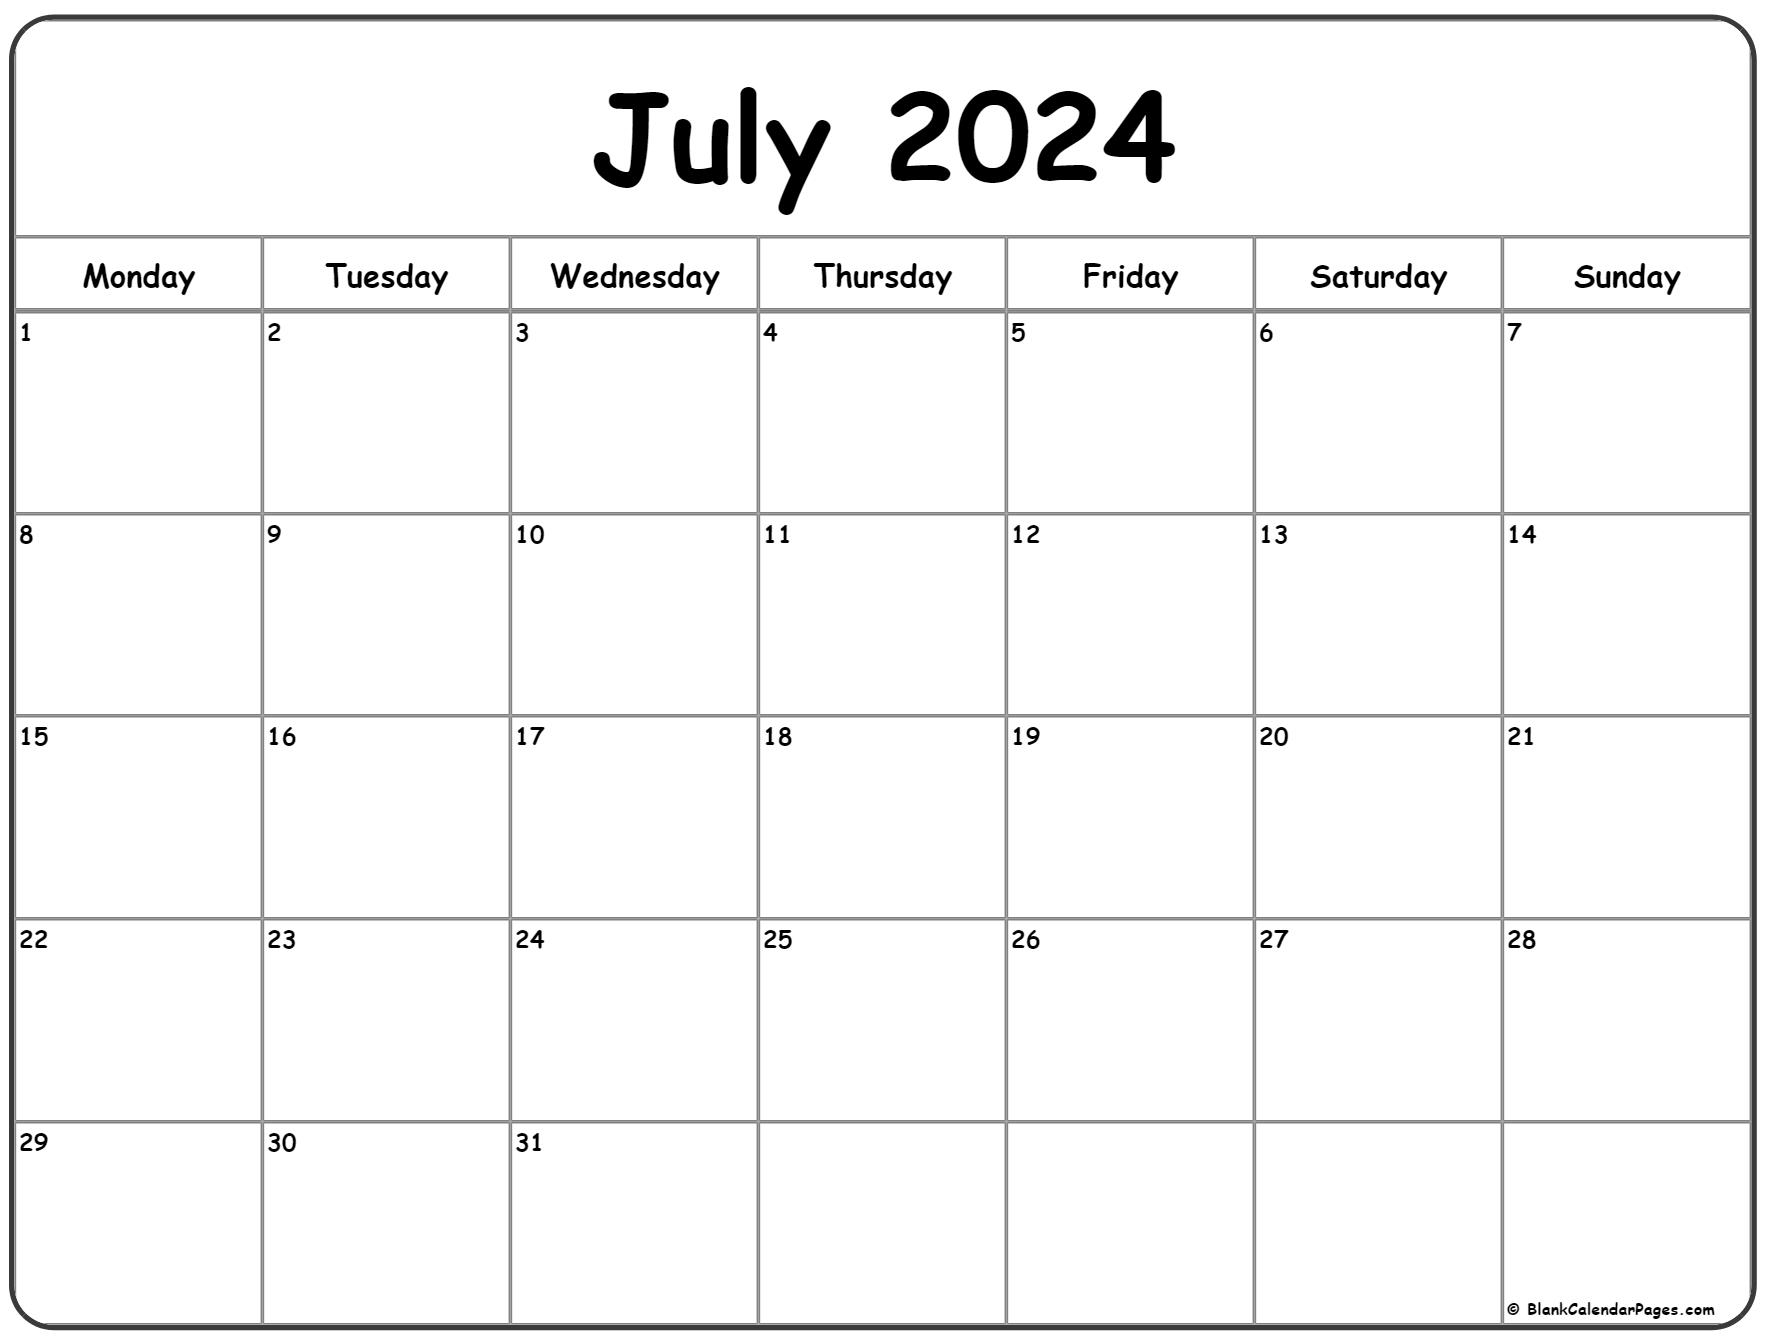 July 2024 Monday Calendar | Monday To Sunday for July Printable Calendar 2024